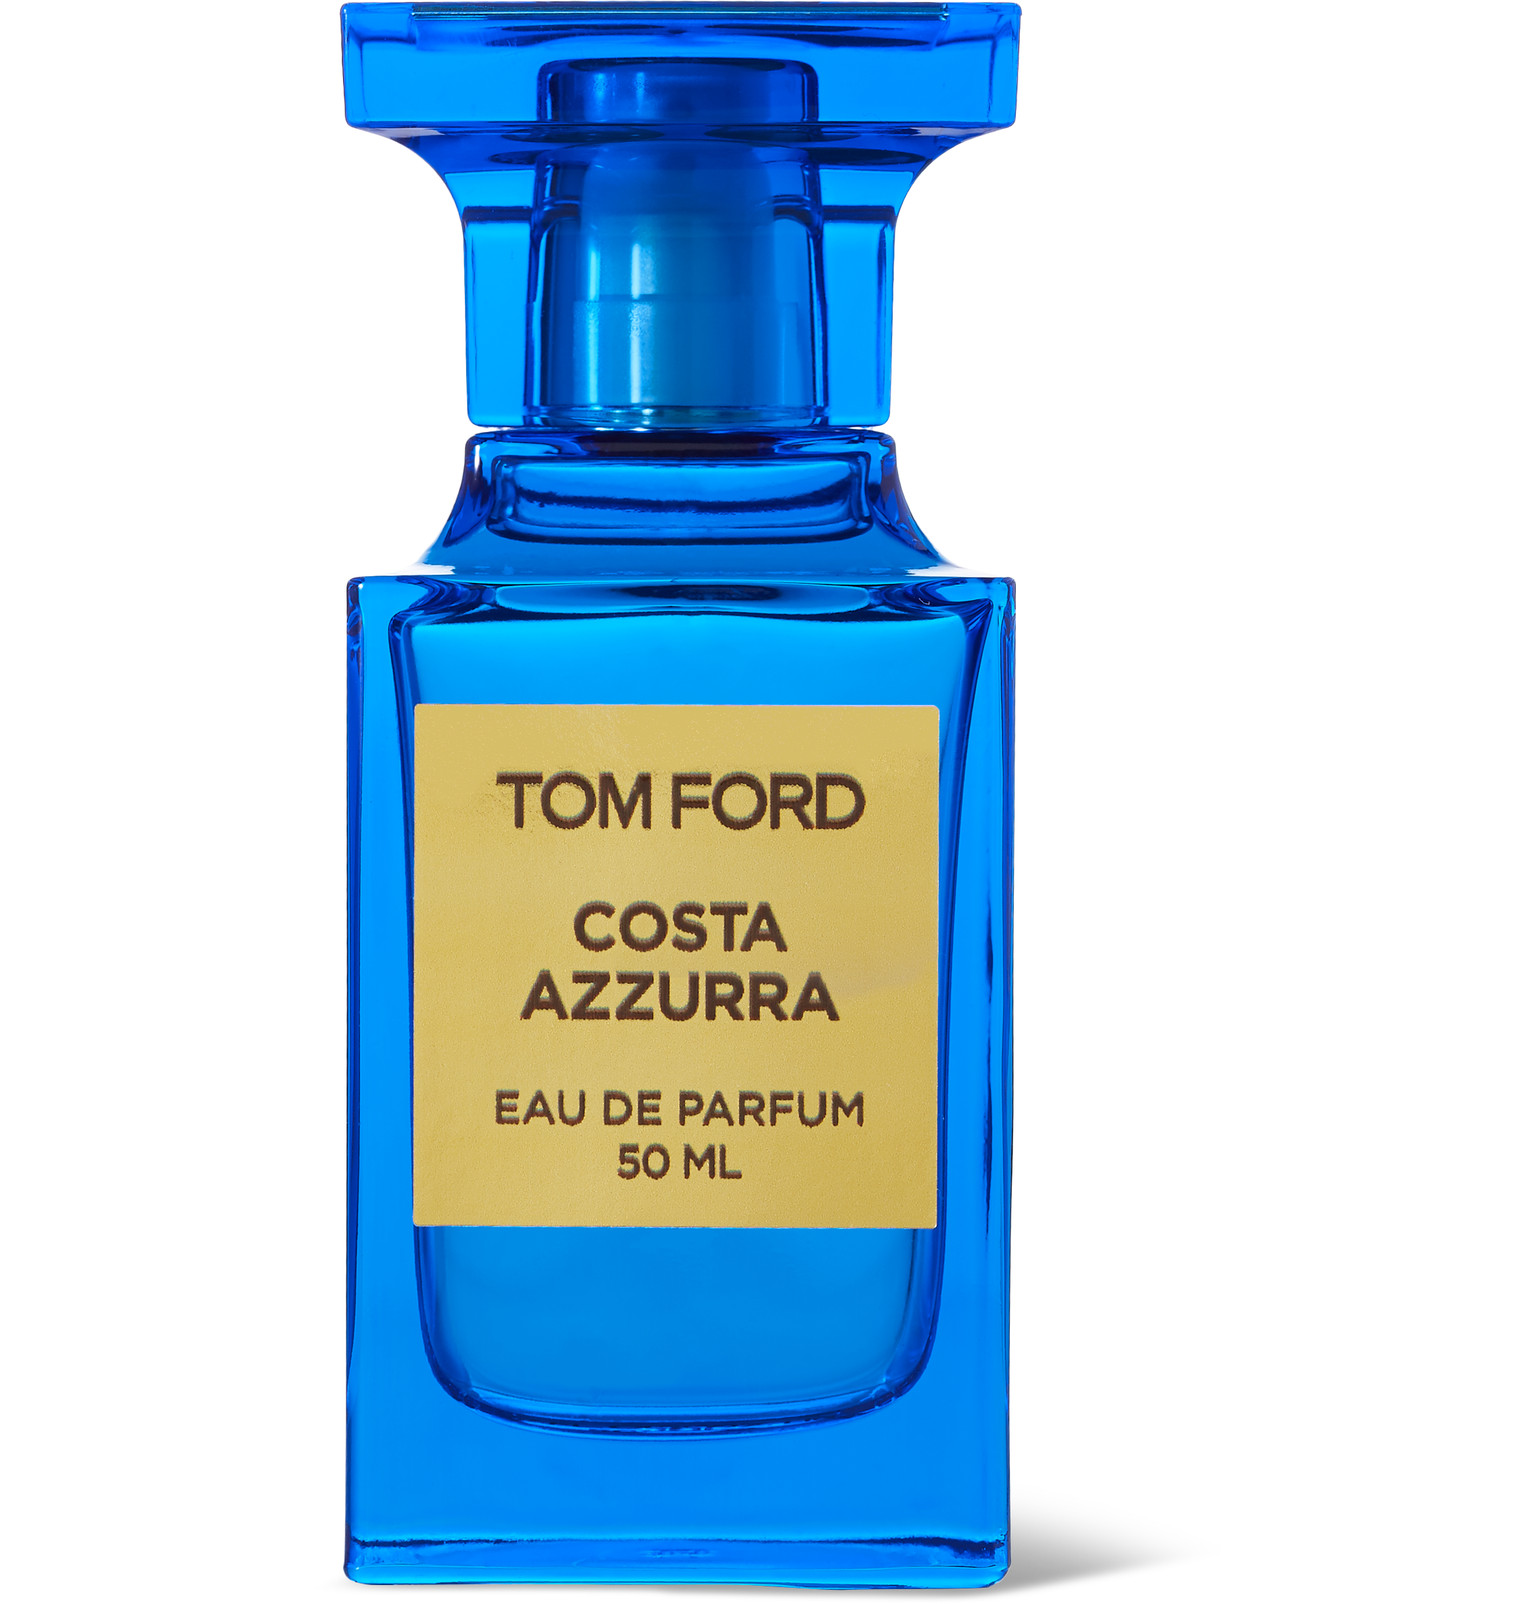 TOM-FORD-BEAUTY-Costa-Azzurra-Eau-de-Parfum-Cypress-Oil-Driftwood-amp-Fucus-Algae-Oil-50ml-Men-Colorless.jpg